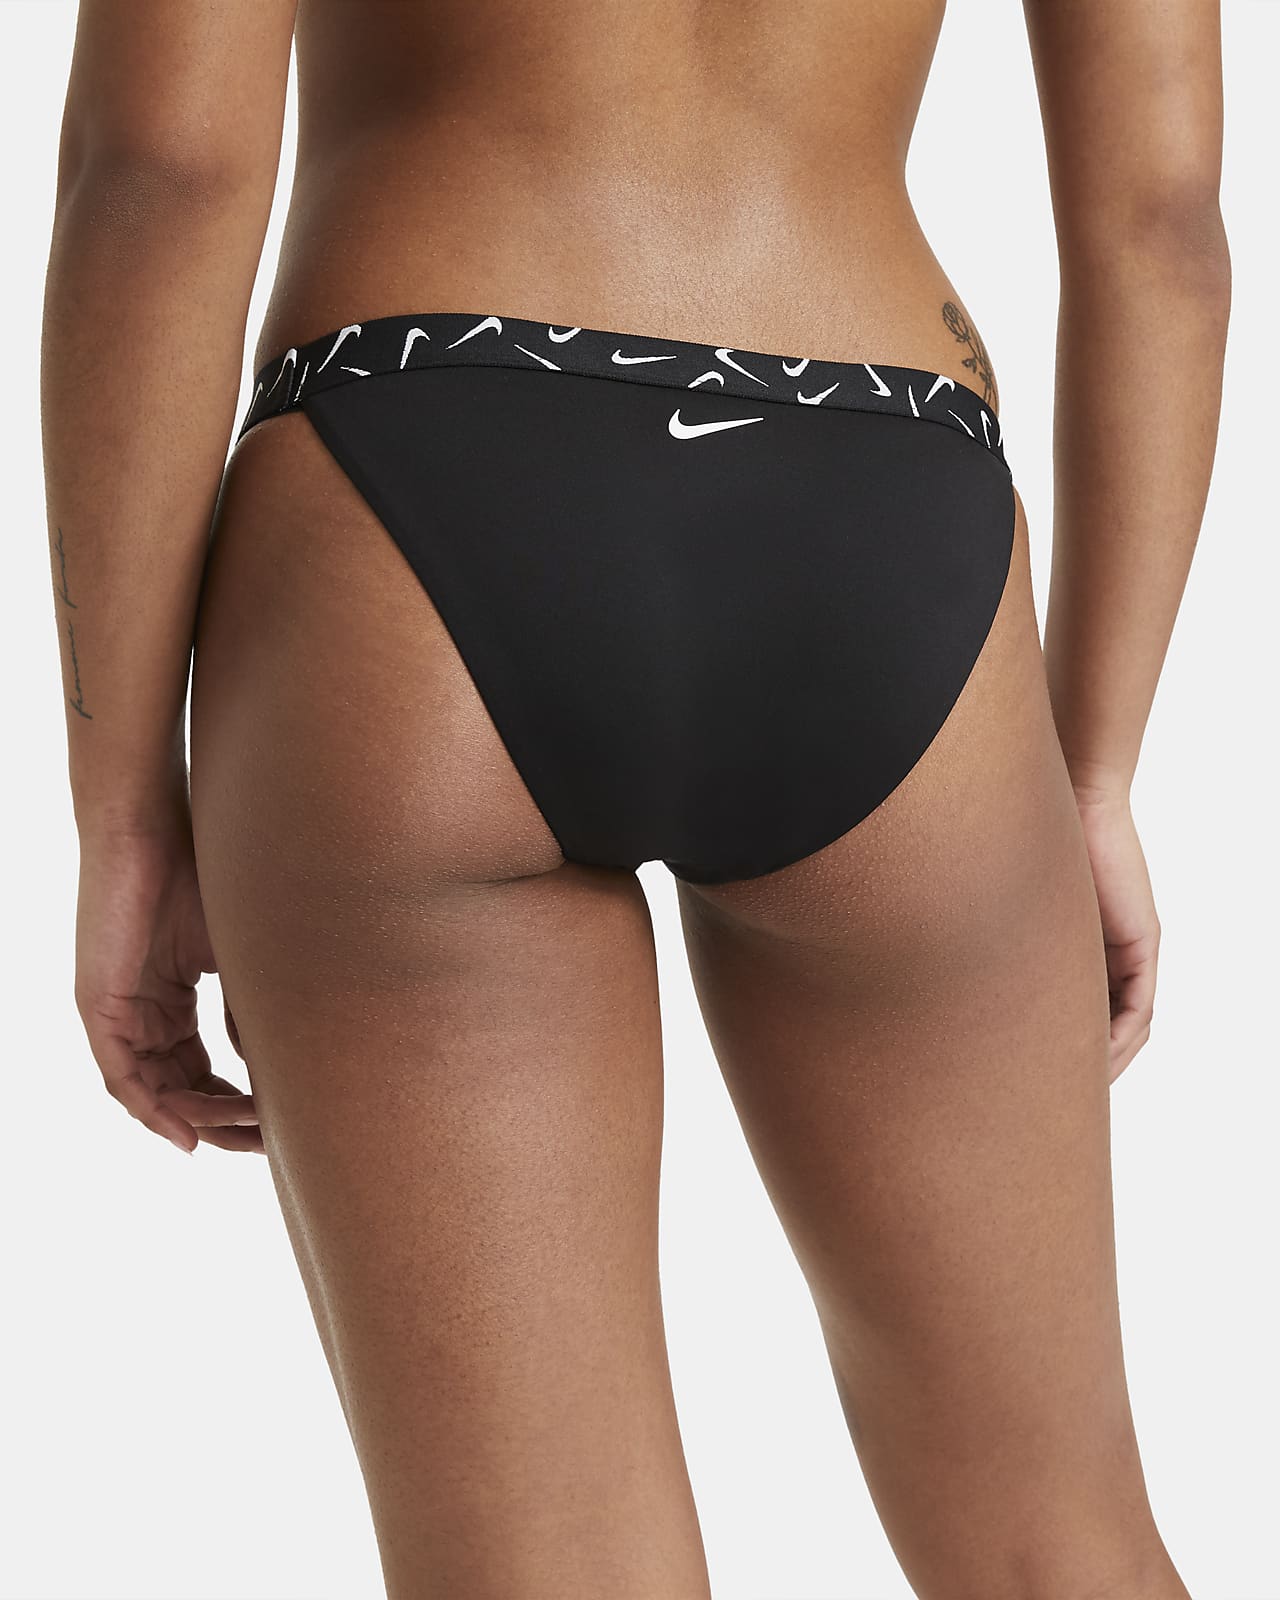 Nike Women's Bikini Bottoms. Nike SE